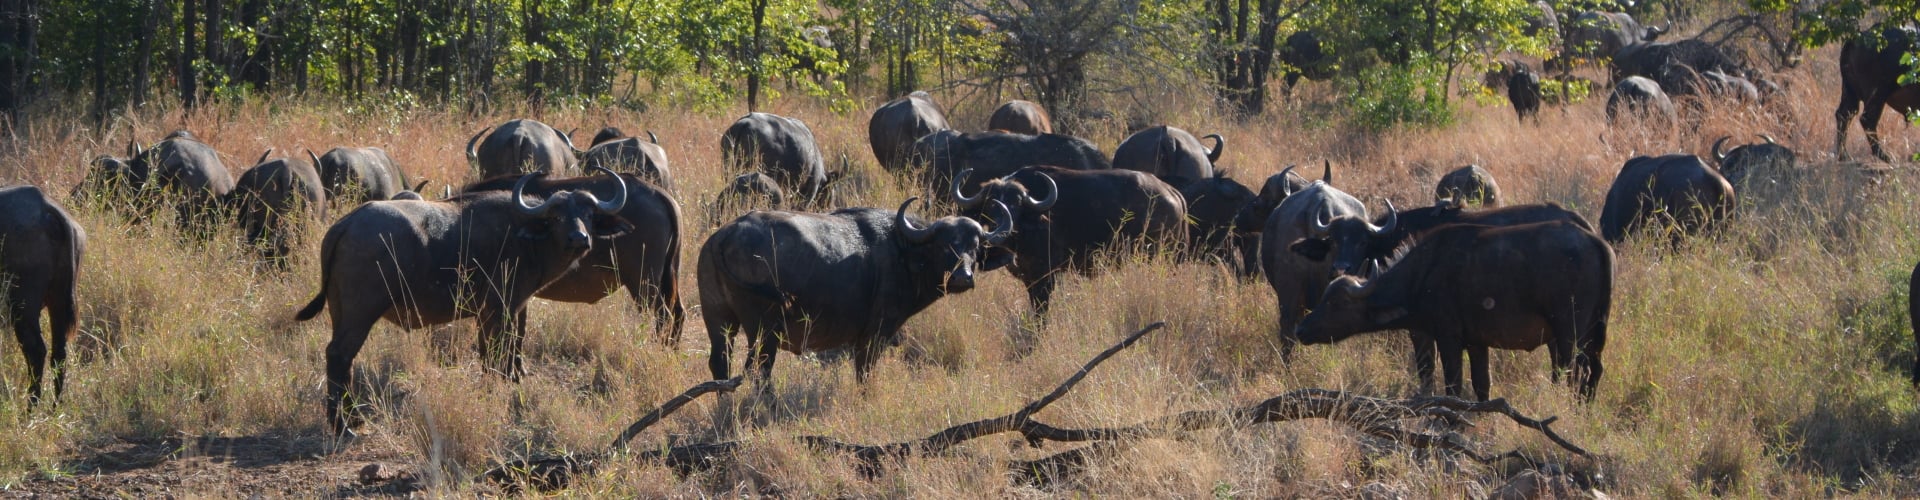 Buffels Kruger bij Punda Maria